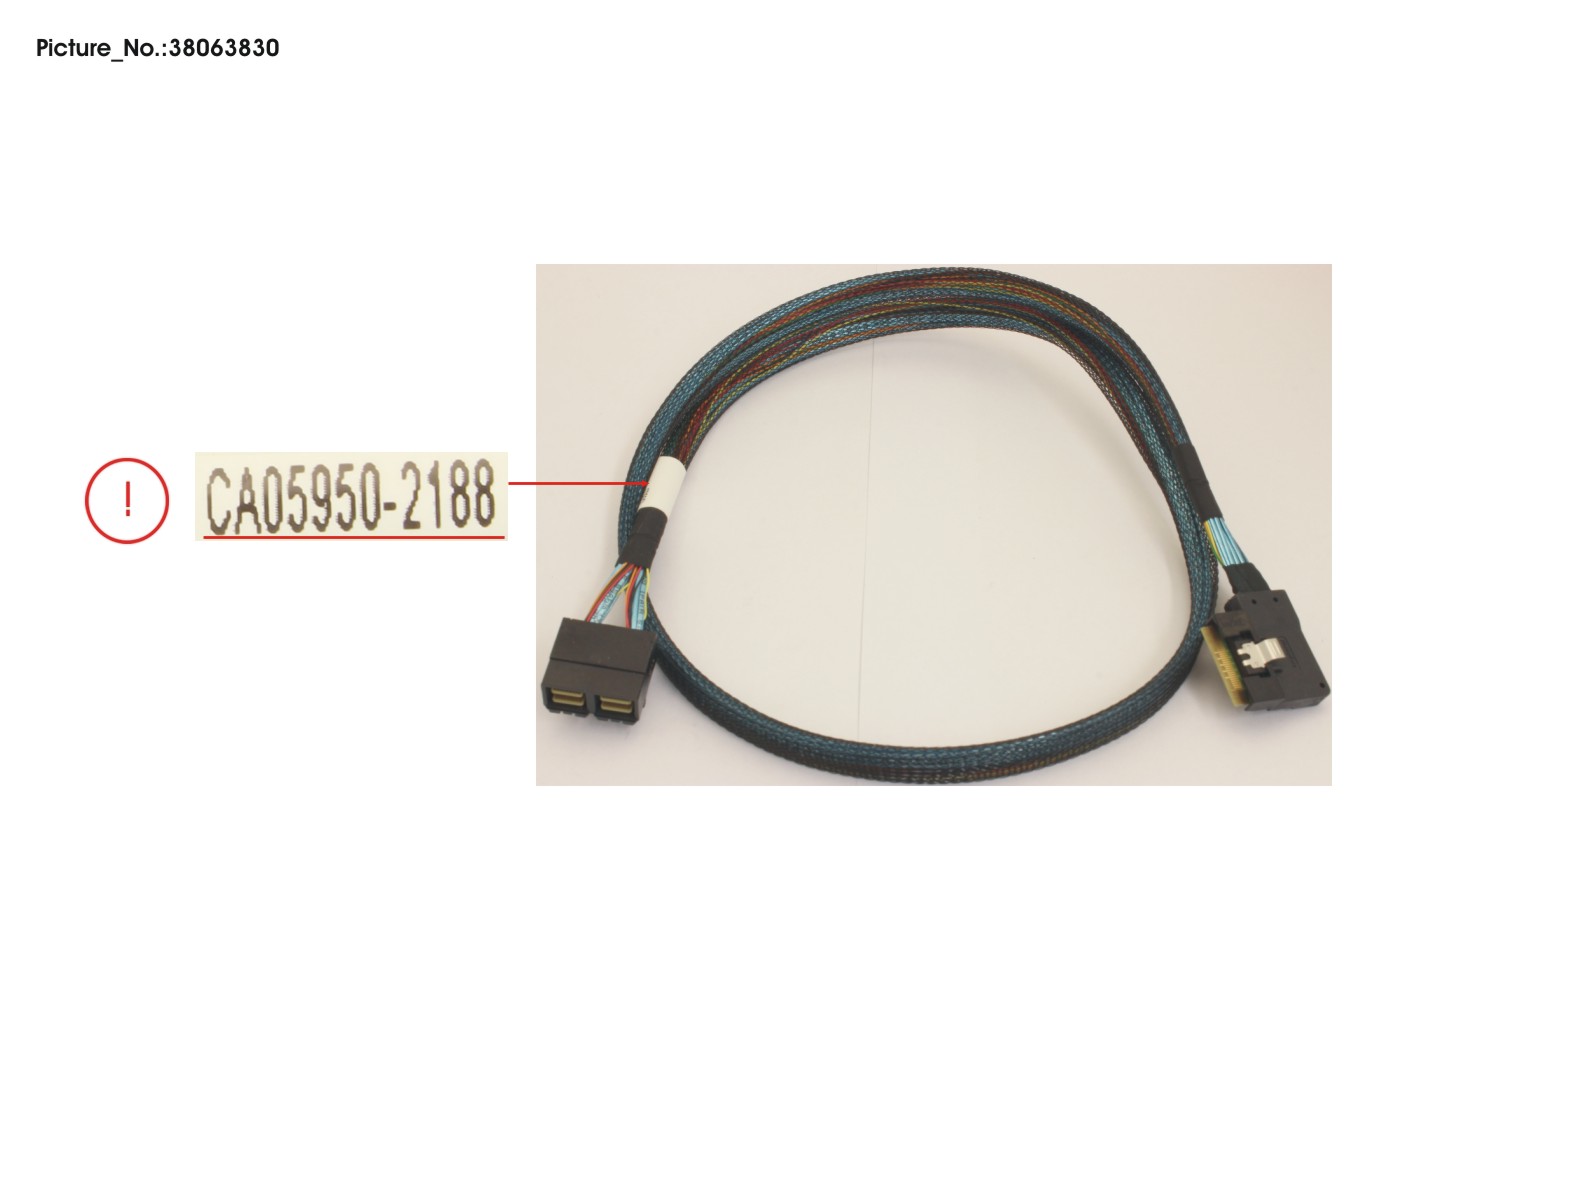 EP5 PCIE SLIMLINE CABLE